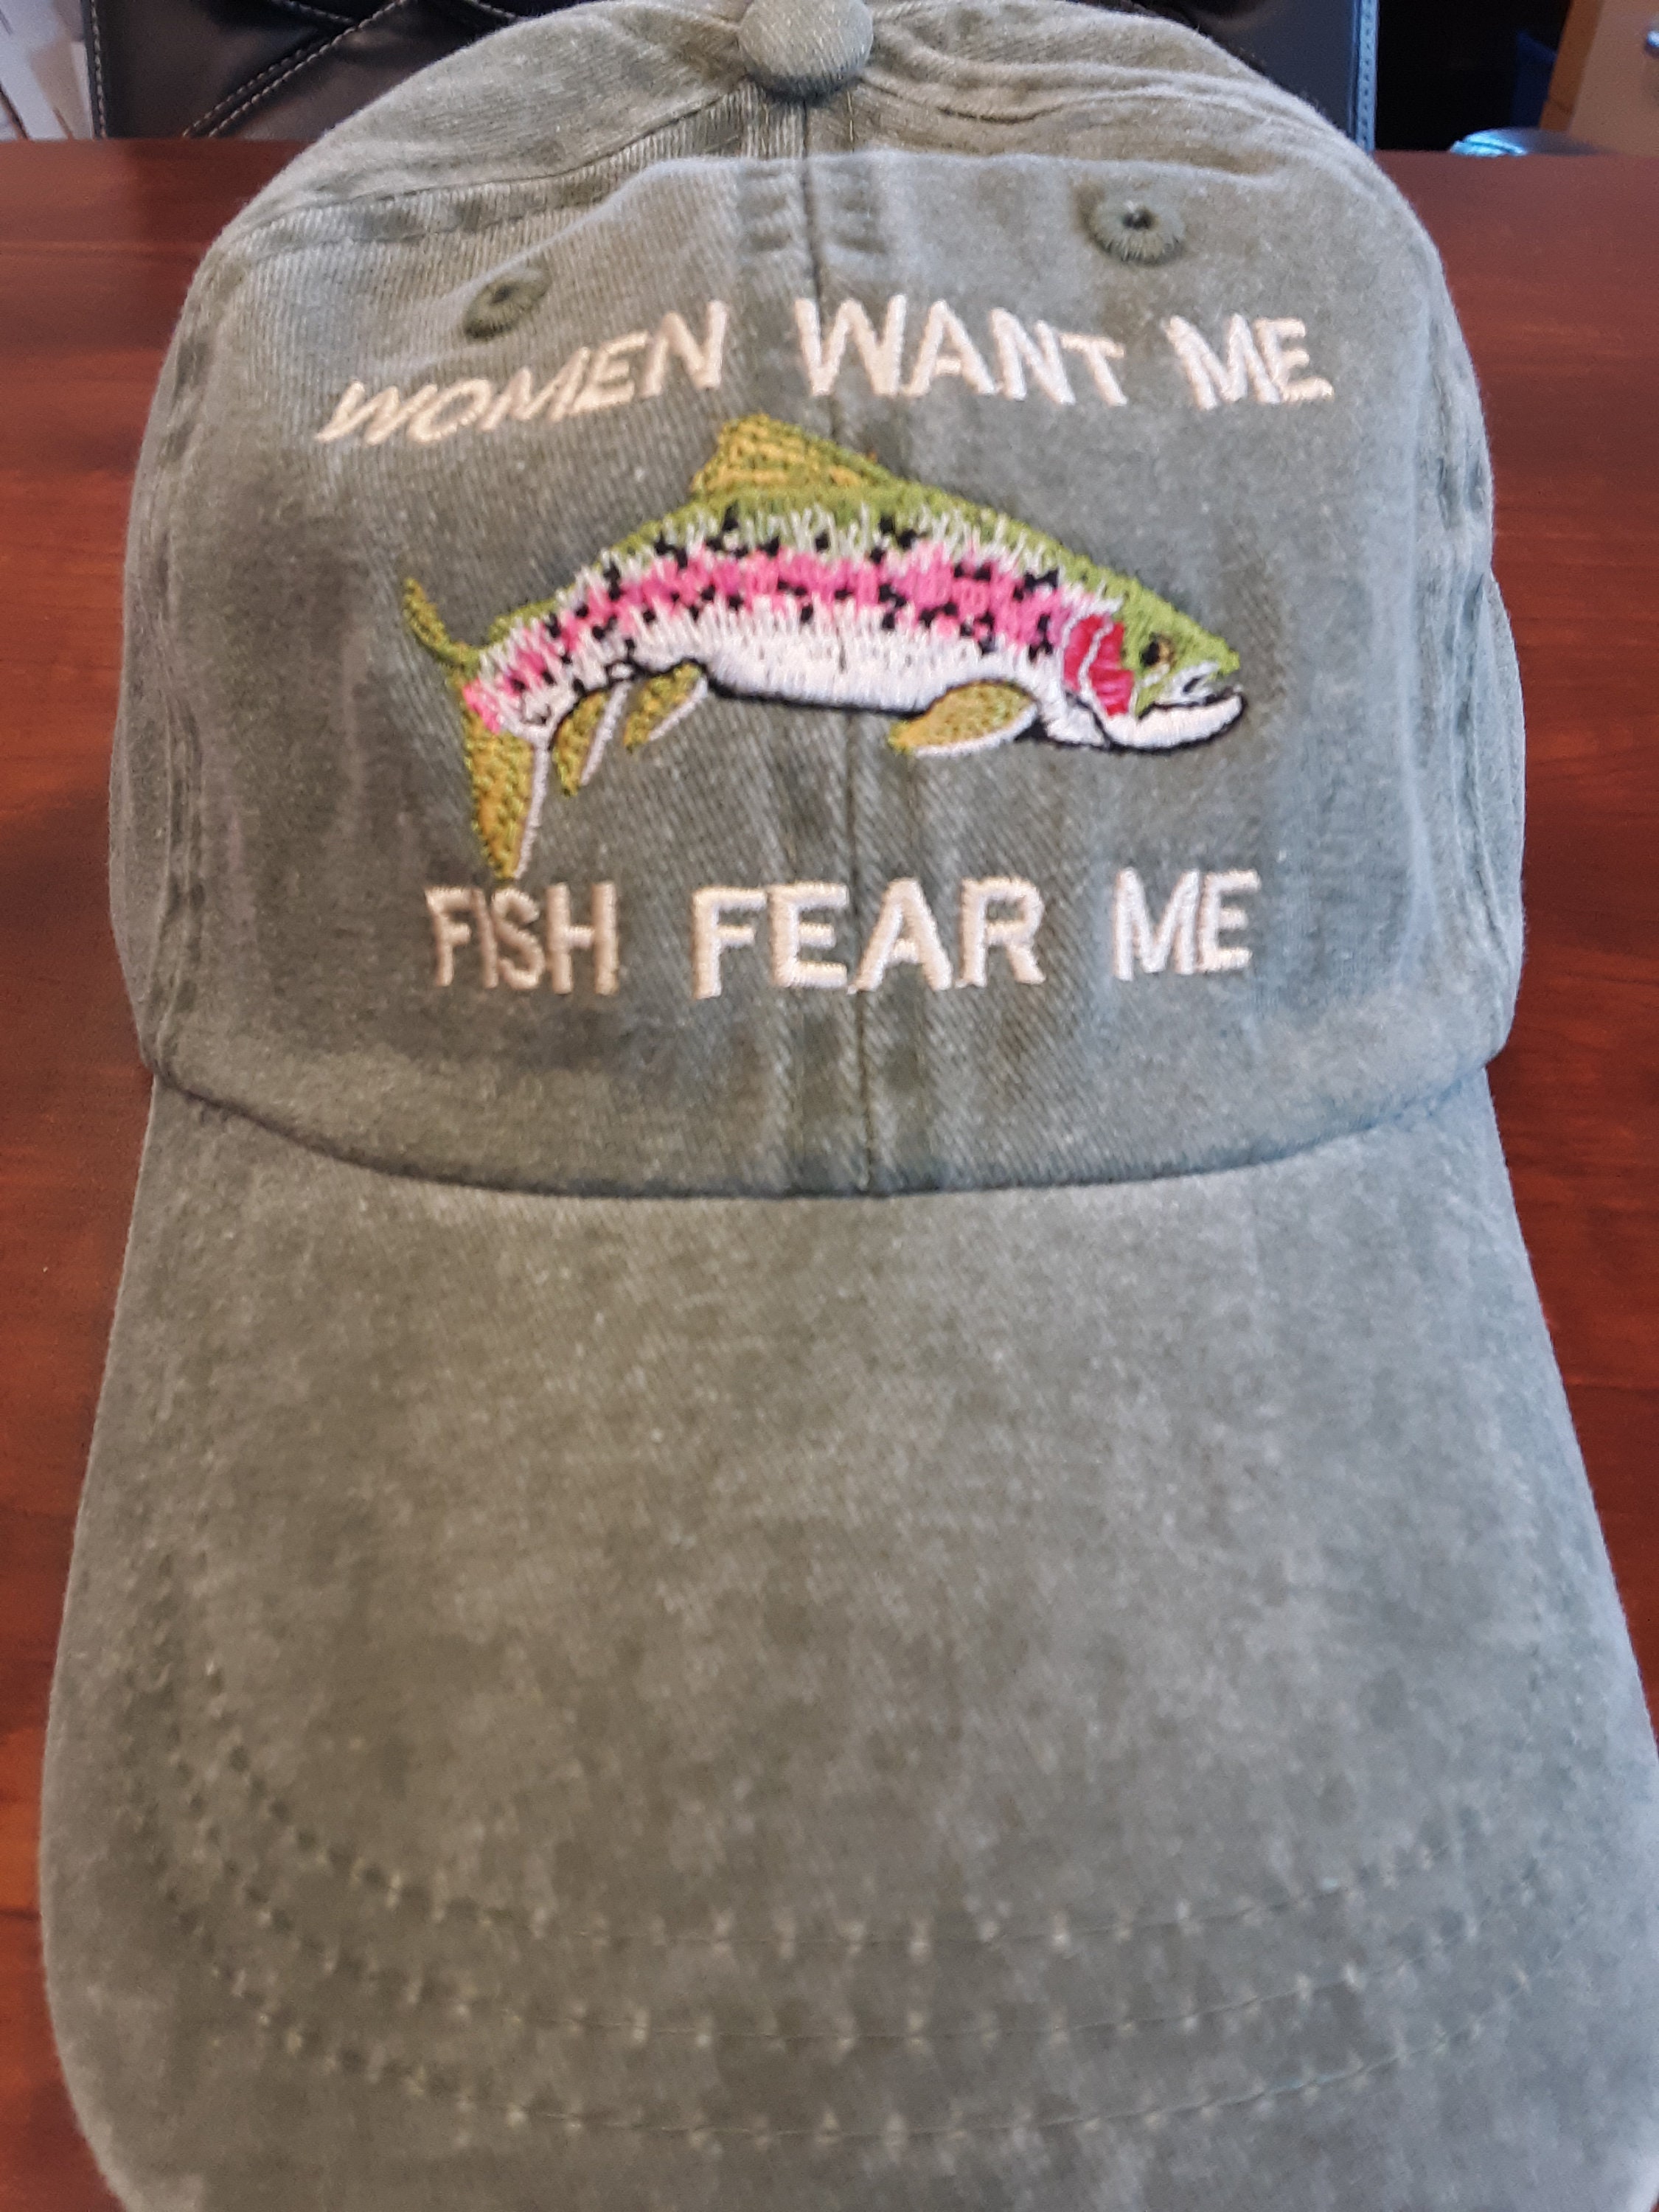 Women Want Me, Fish Fear Me -  Canada